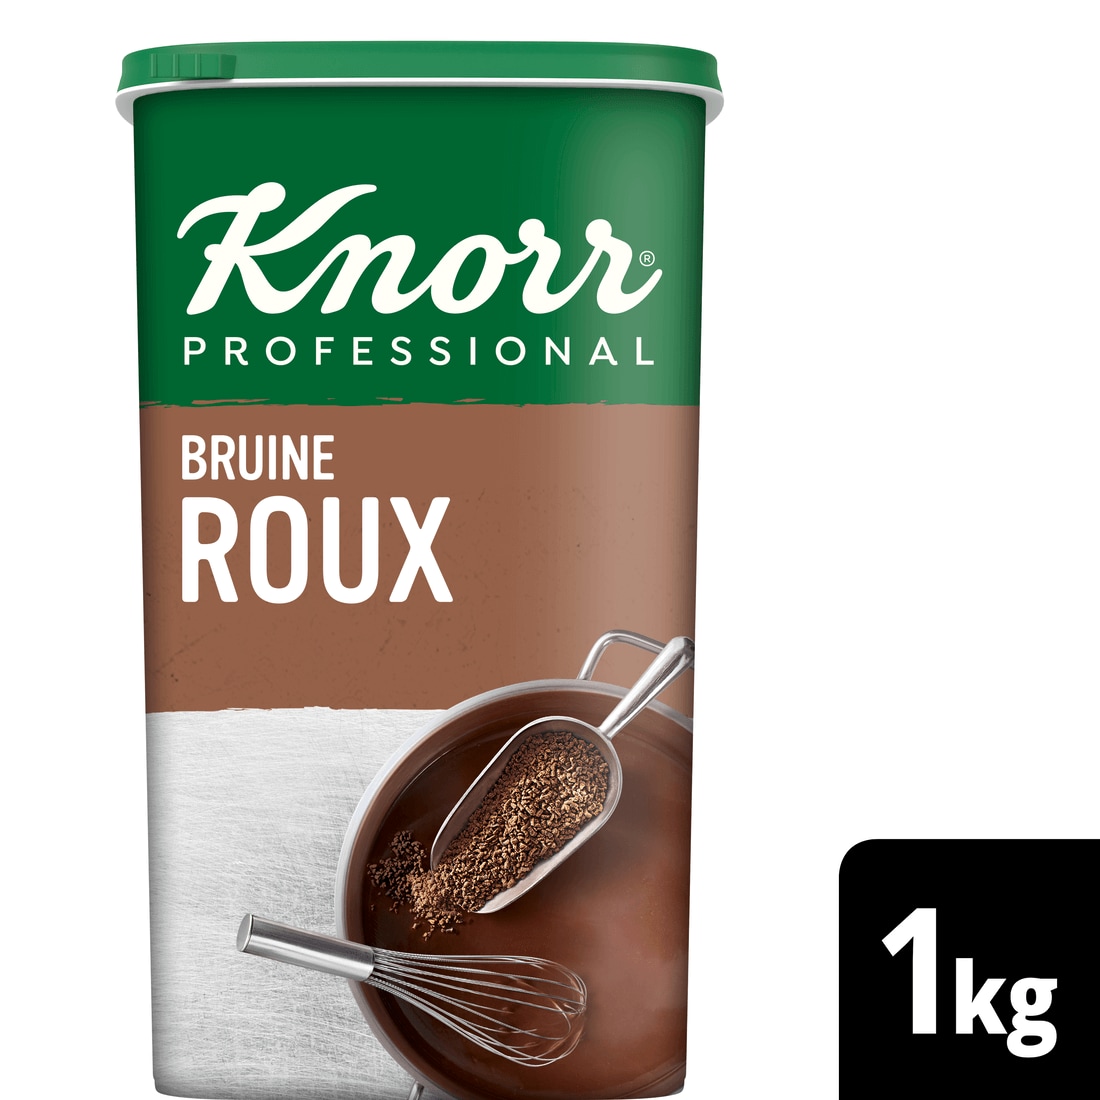 Knorr Fonds de Cuisine Bruine Roux Korrels 1 kg - 